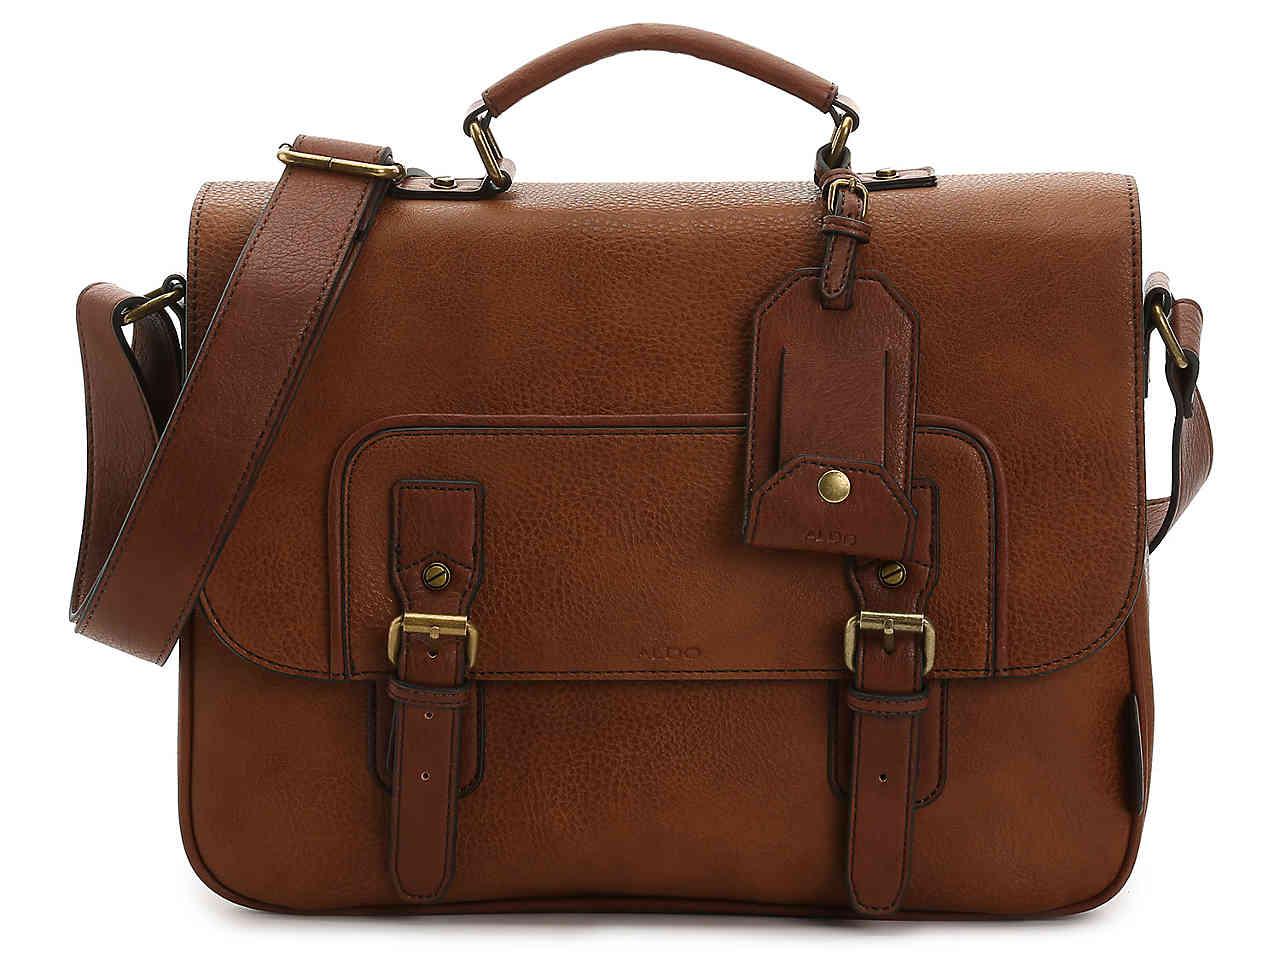 ALDO Norman Messenger Bag in Brown for Men - Lyst